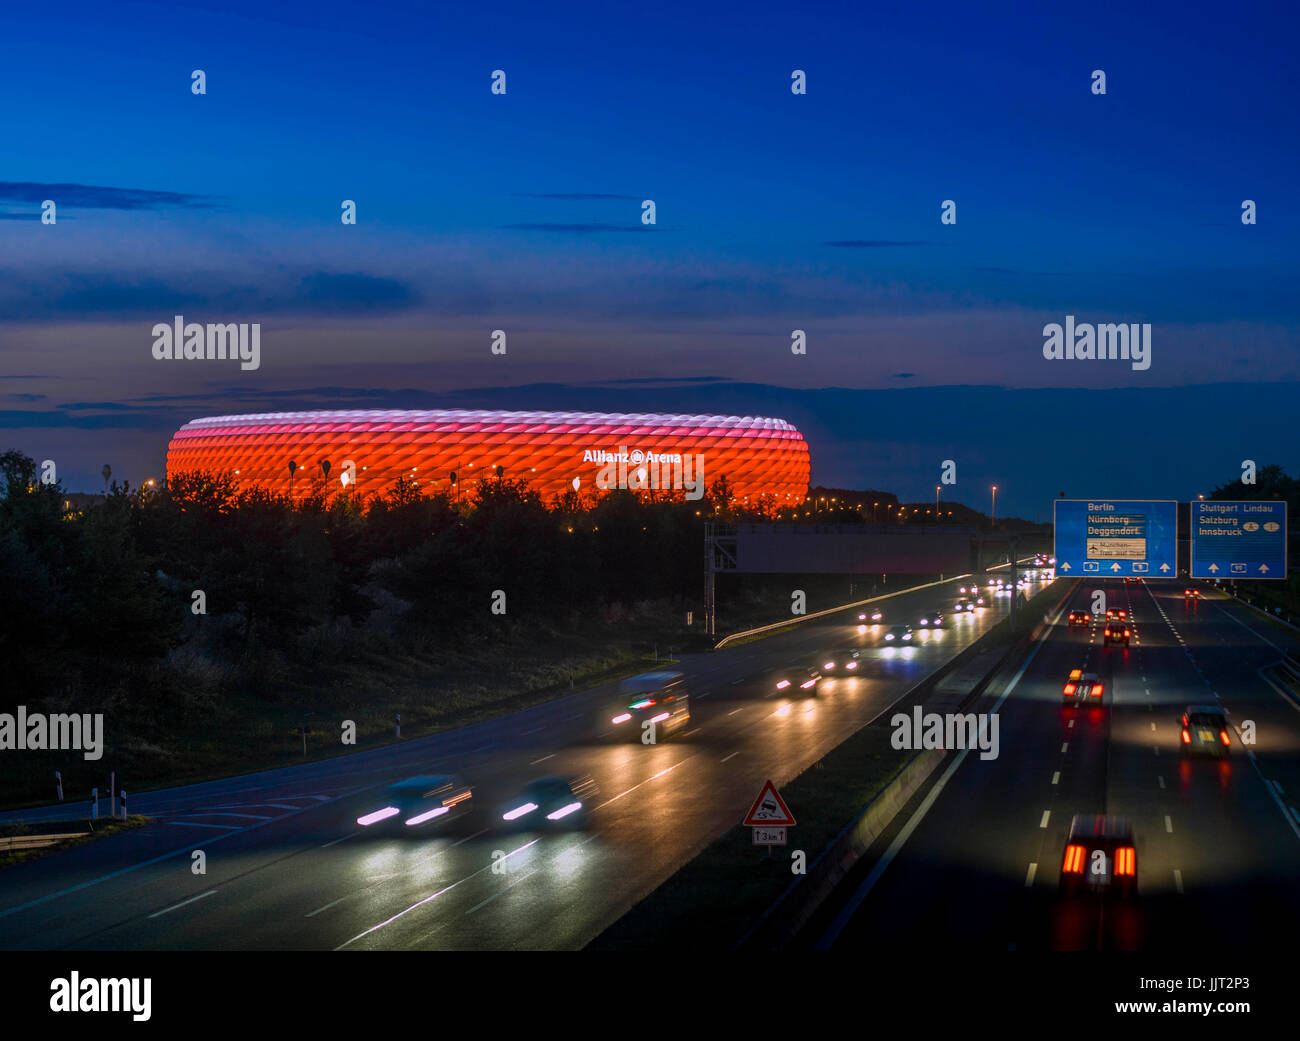 Célèbre stade de football Allianz Arena de Munich, Bavaria, Germany, Europe Banque D'Images